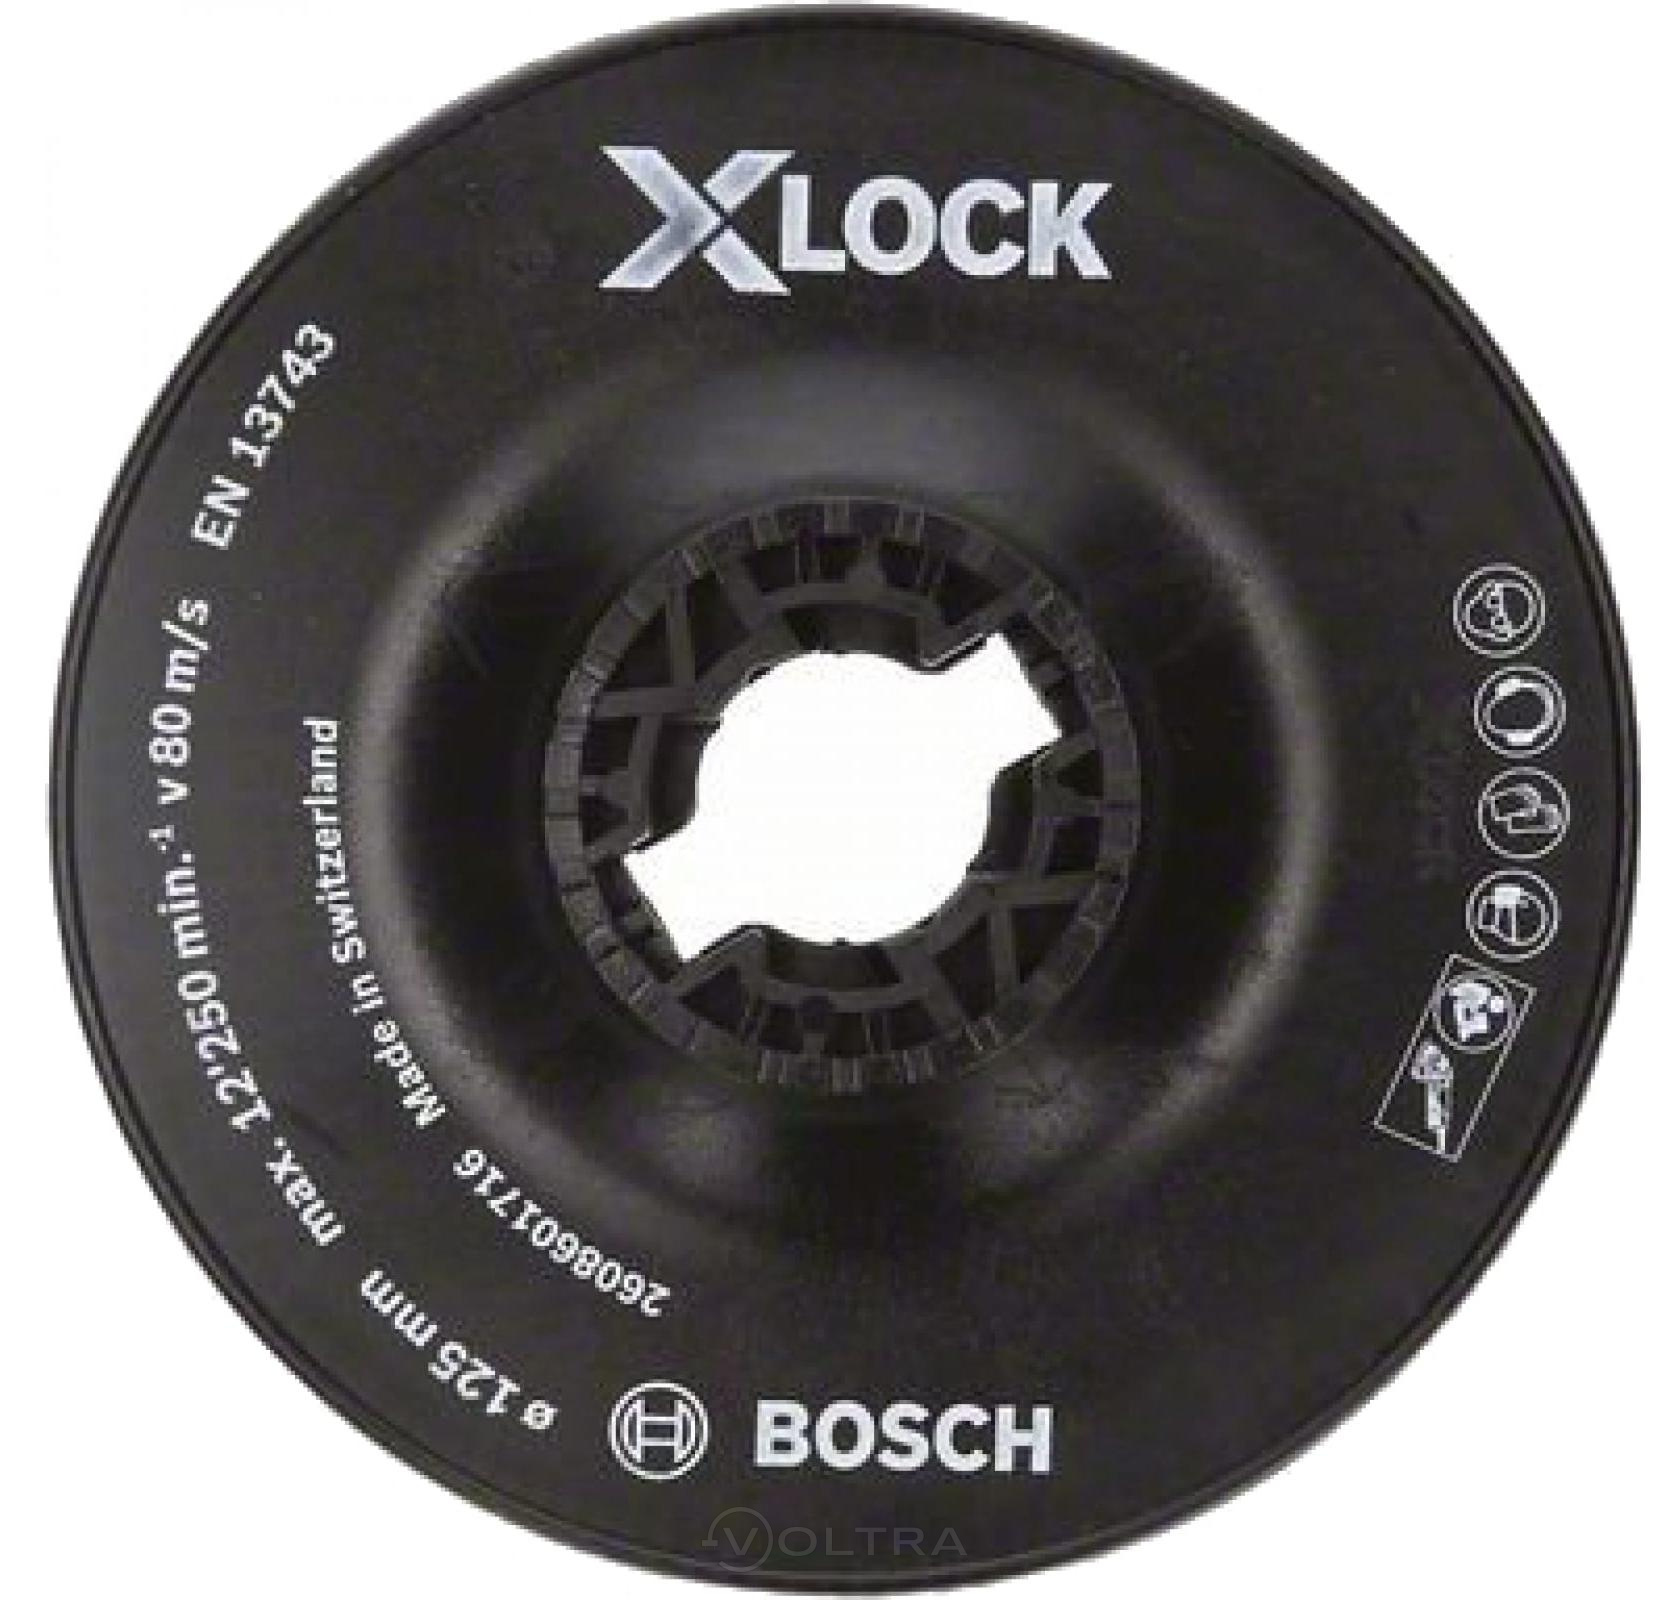 Опорная тарелка 125мм X-LOCK для фибр. листов твердая Bosch (2608601716)